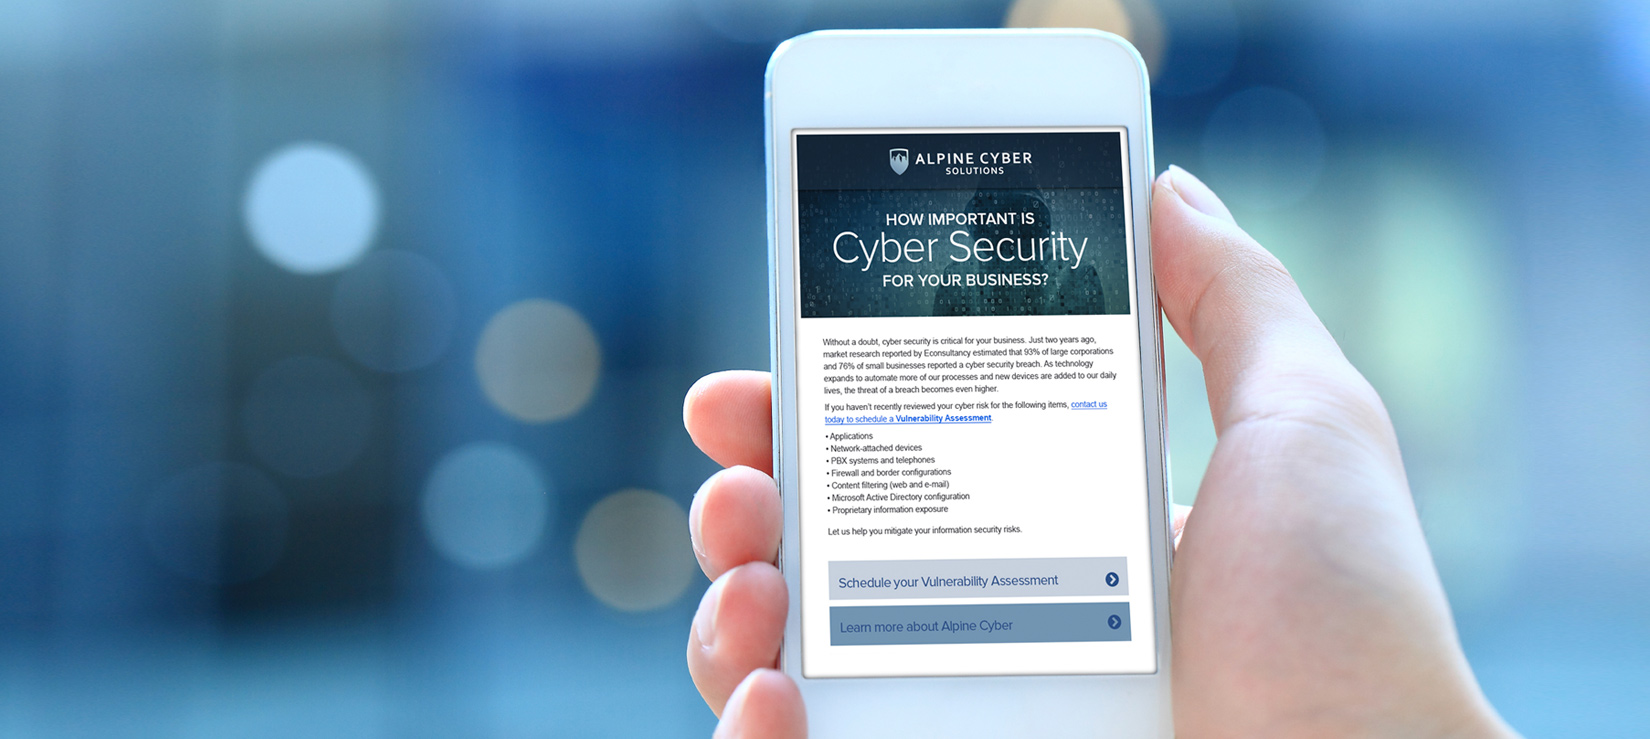 Alpine Cyber Security website on smartphone screen